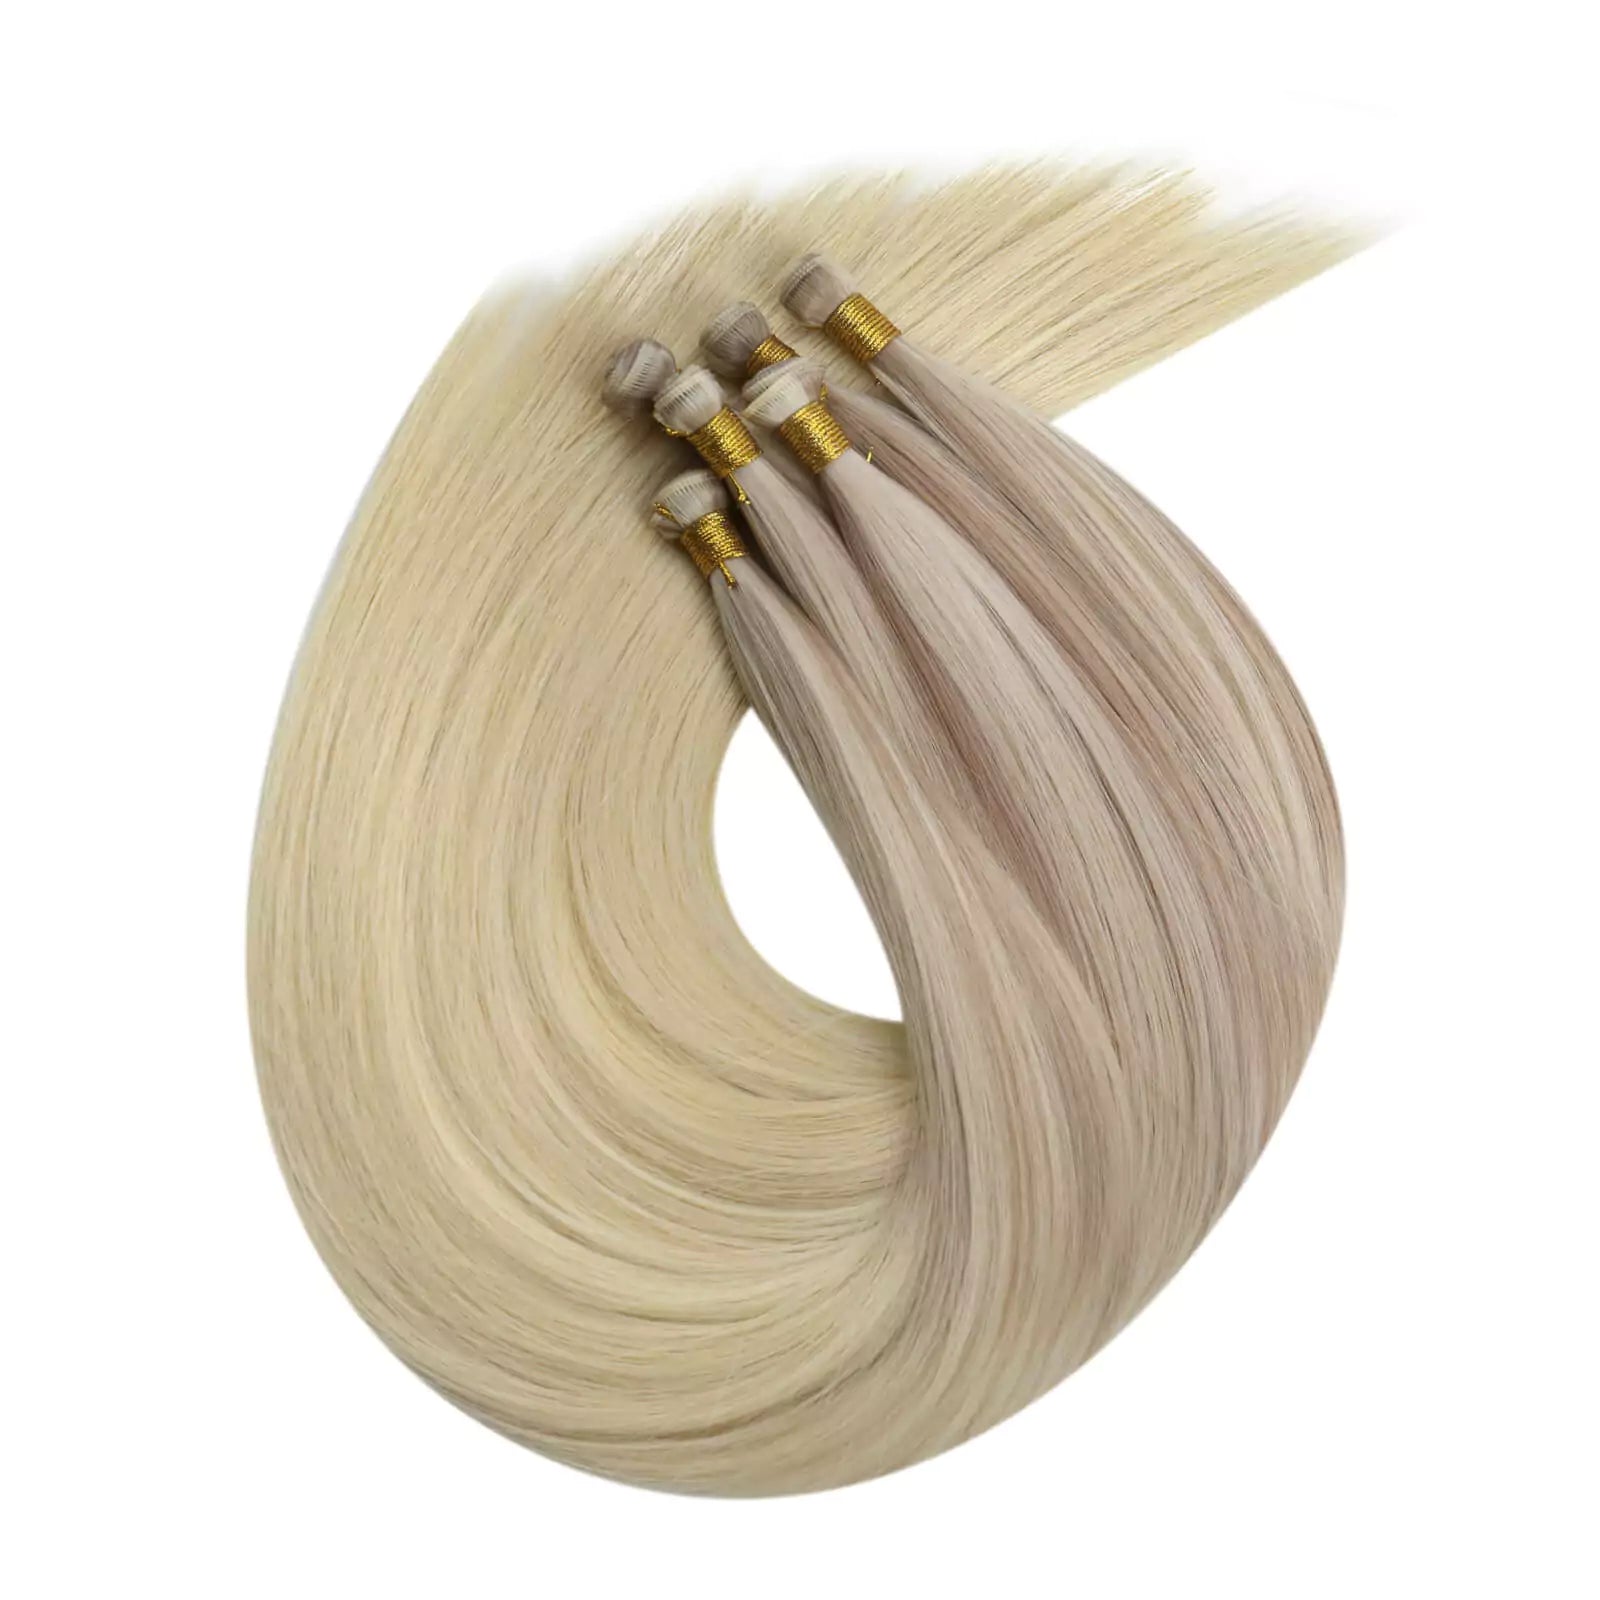 22 inch human hair extensions weft genius weft